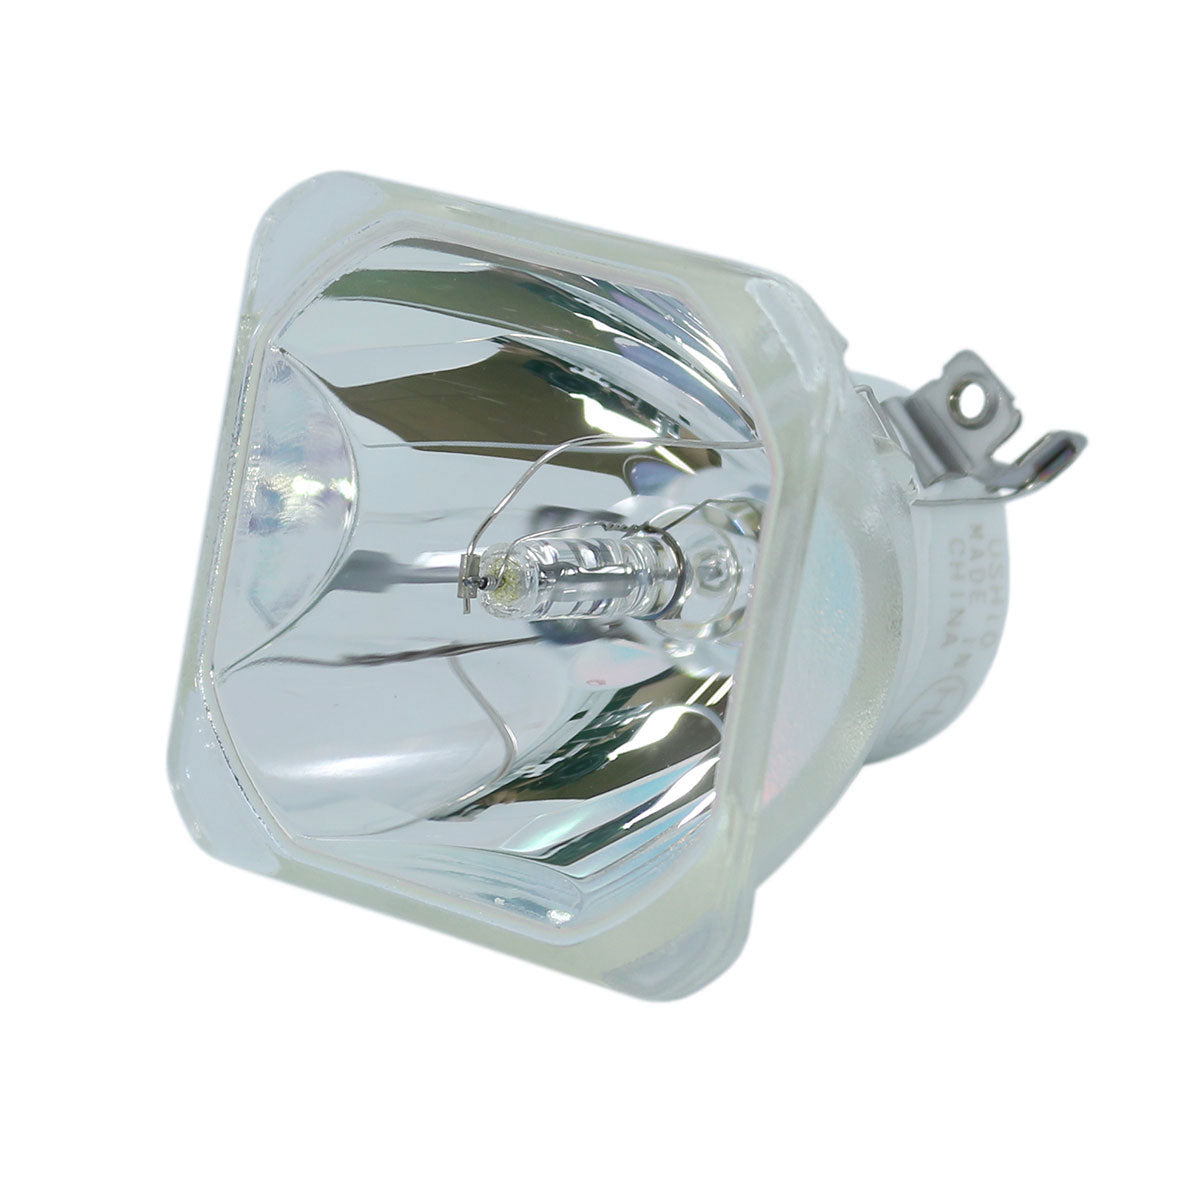 ACTO 1300022500 Ushio Projector Bare Lamp